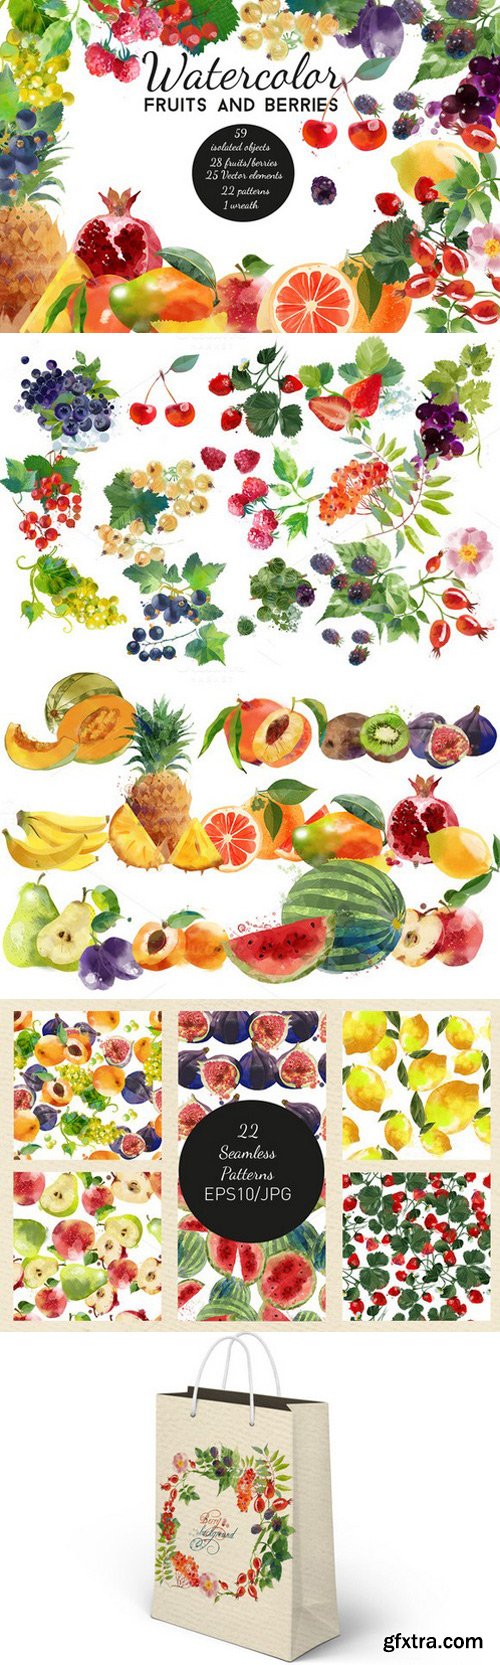 CM - Watercolor fruits and berries 693297